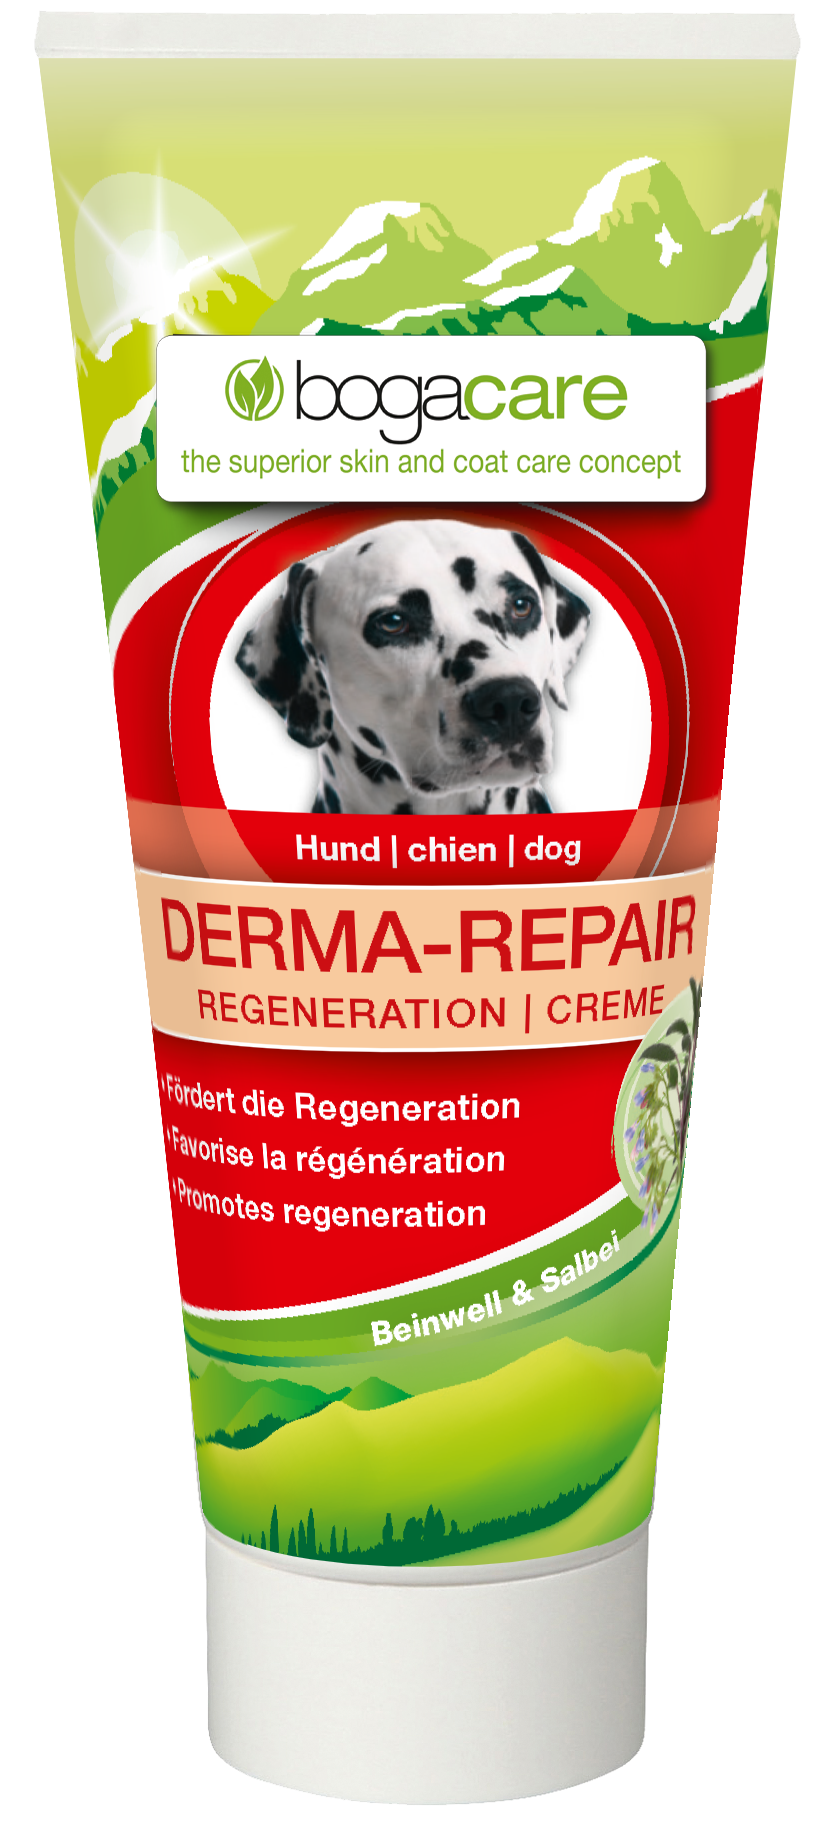 bogacare Derma Repair Salbe für Hunde